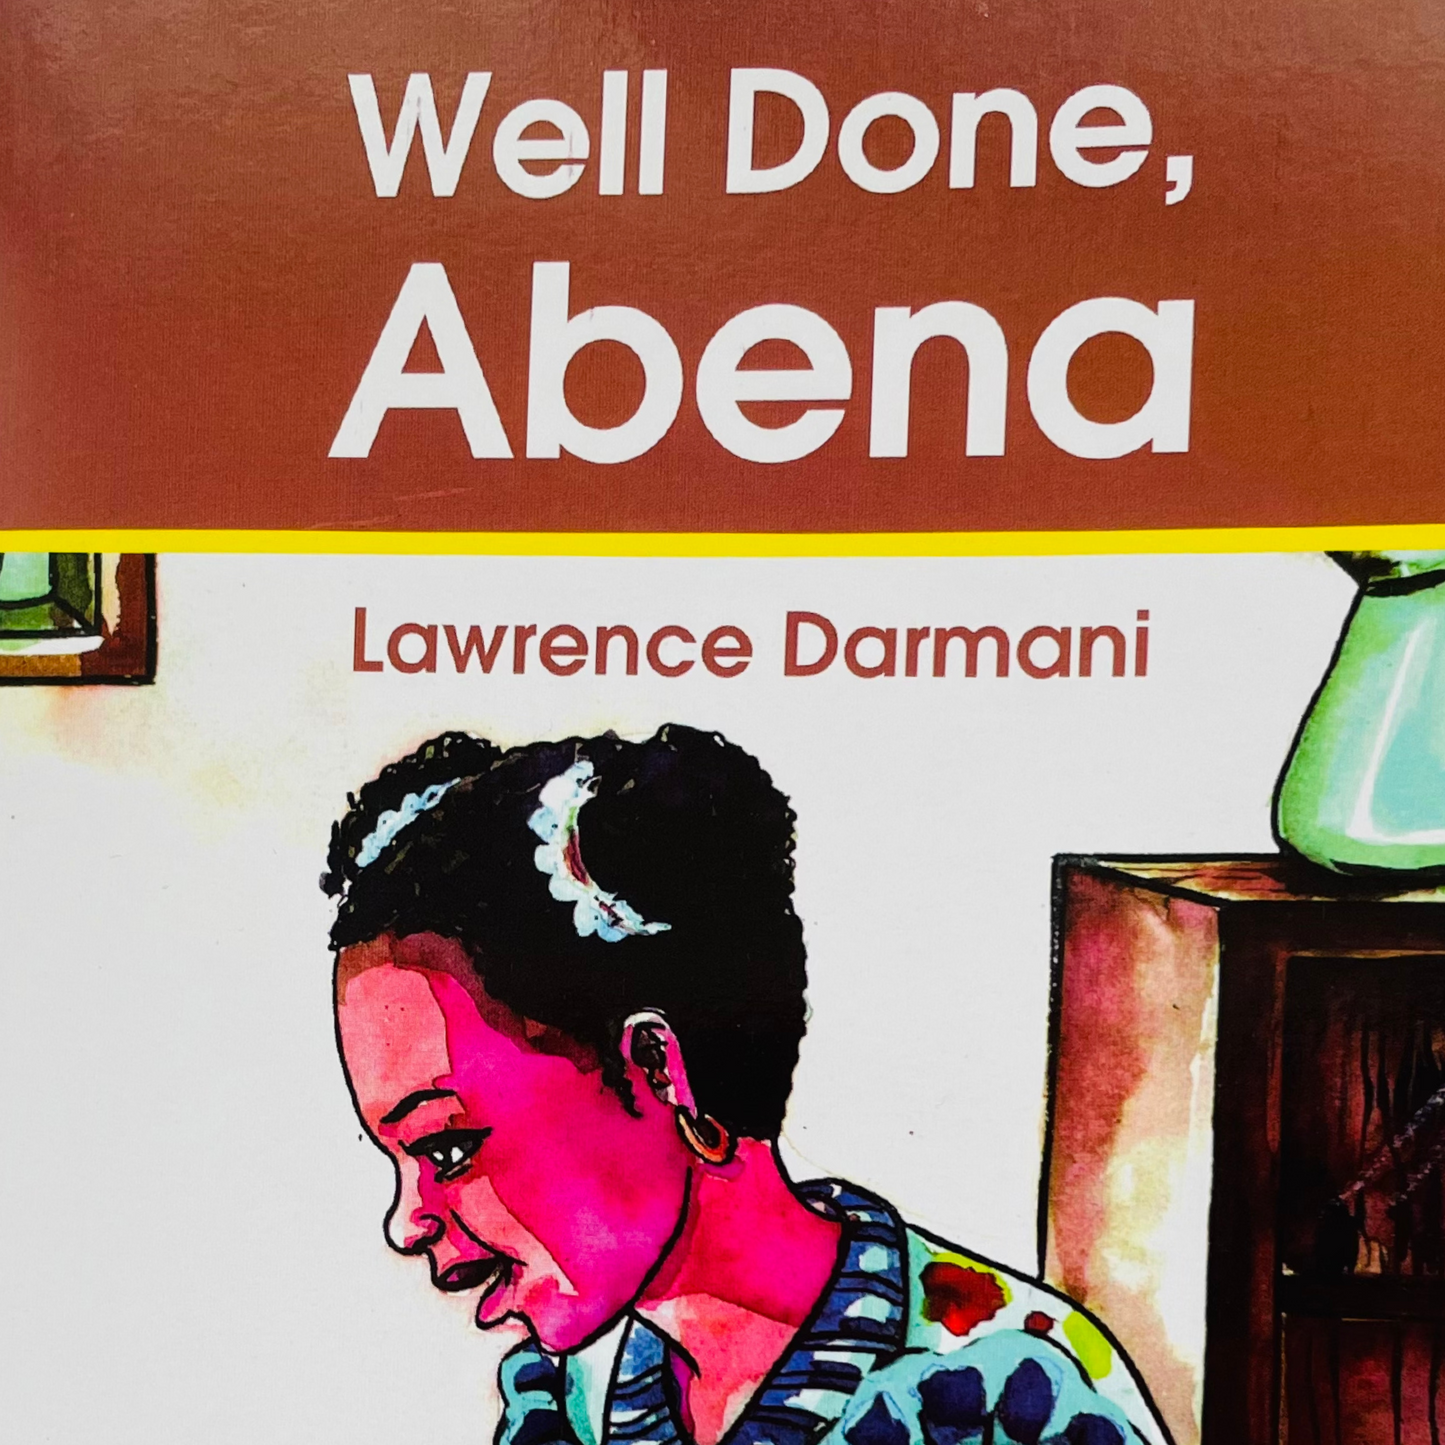 Well done, Abena